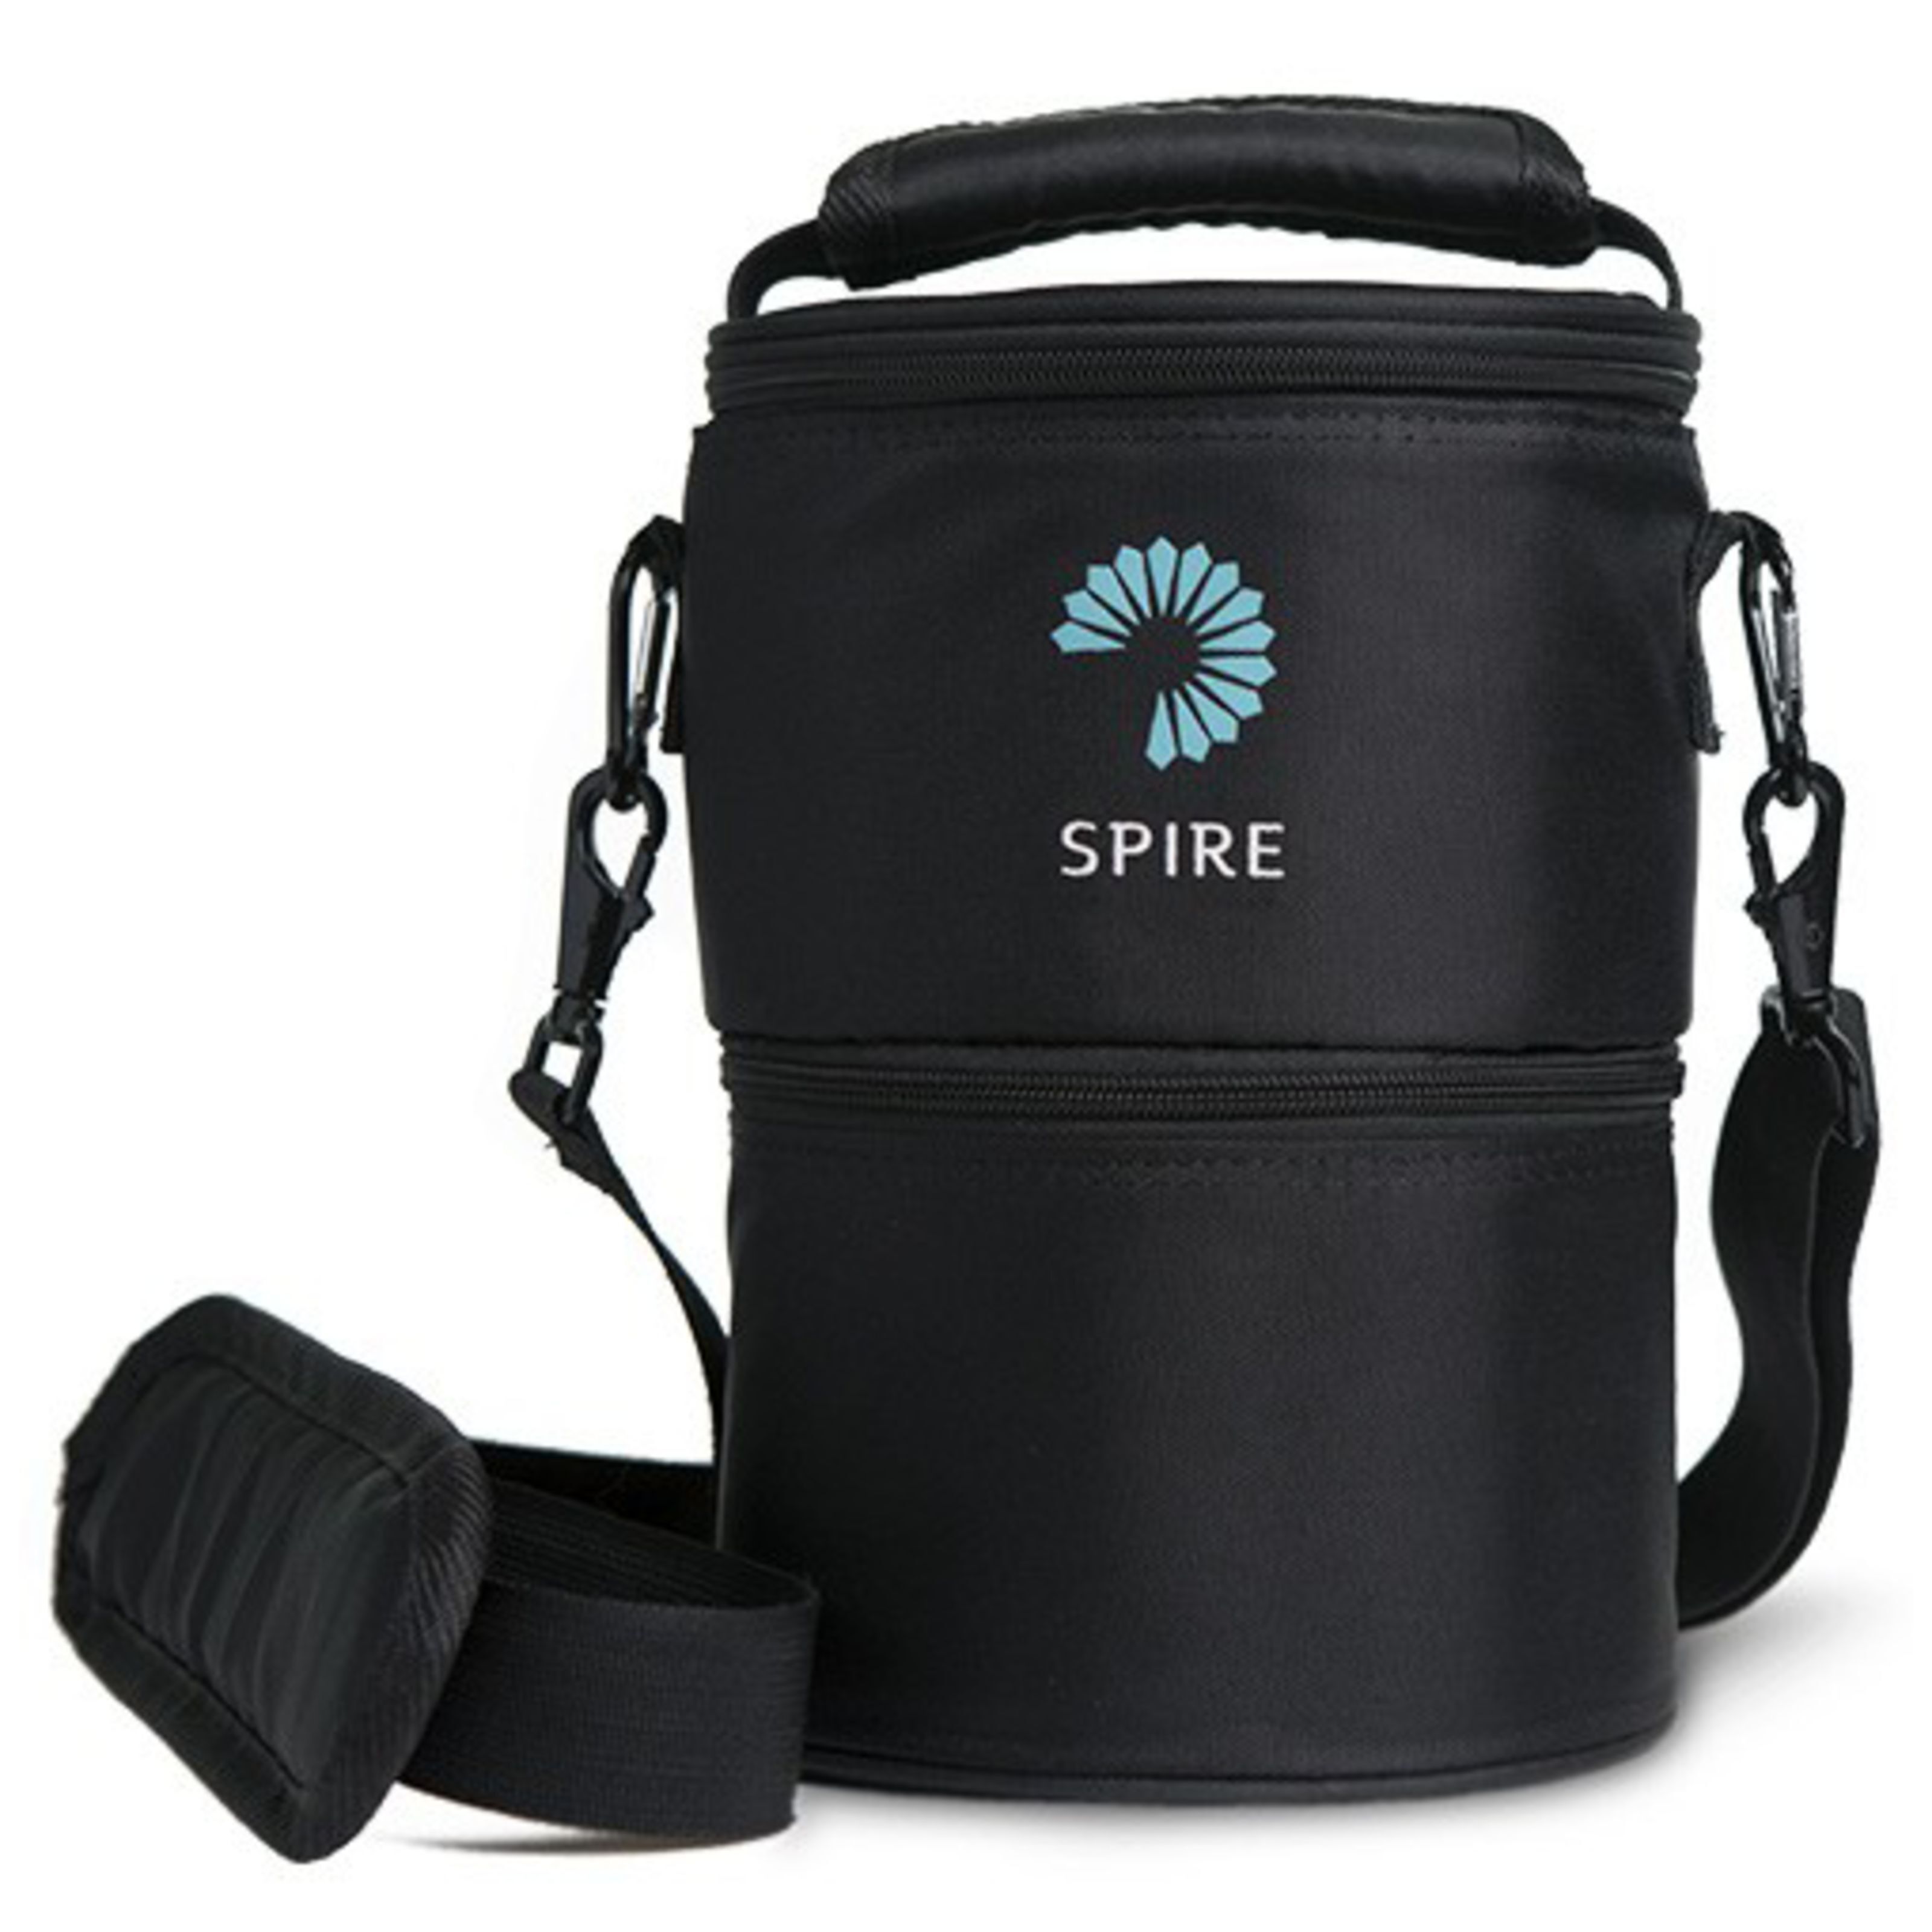 iZotope - Spire Studio Travel Bag